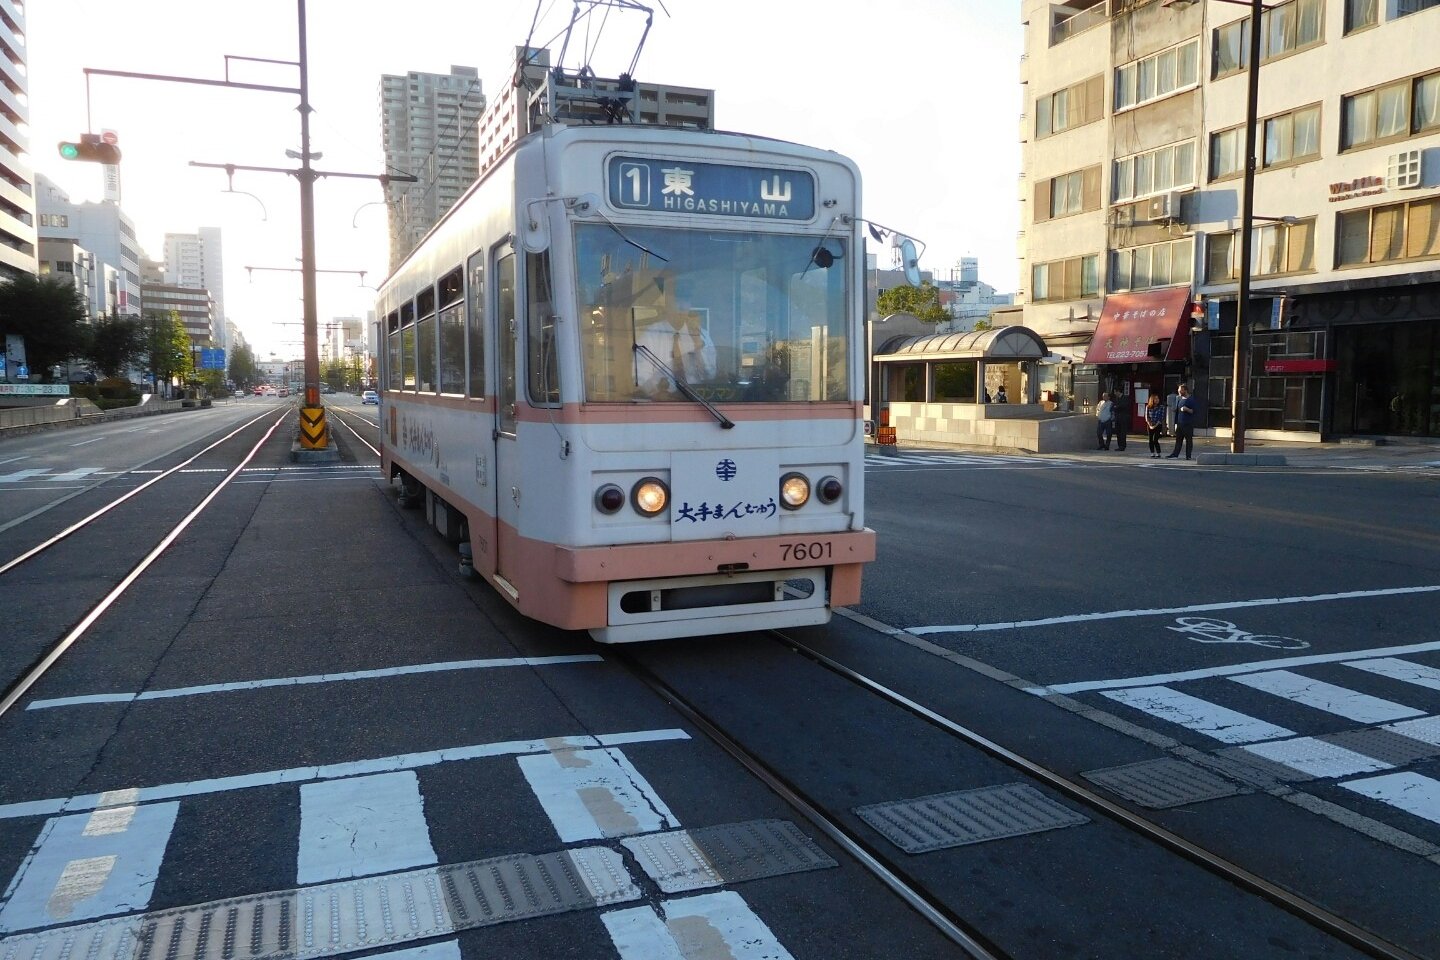 Tramway car